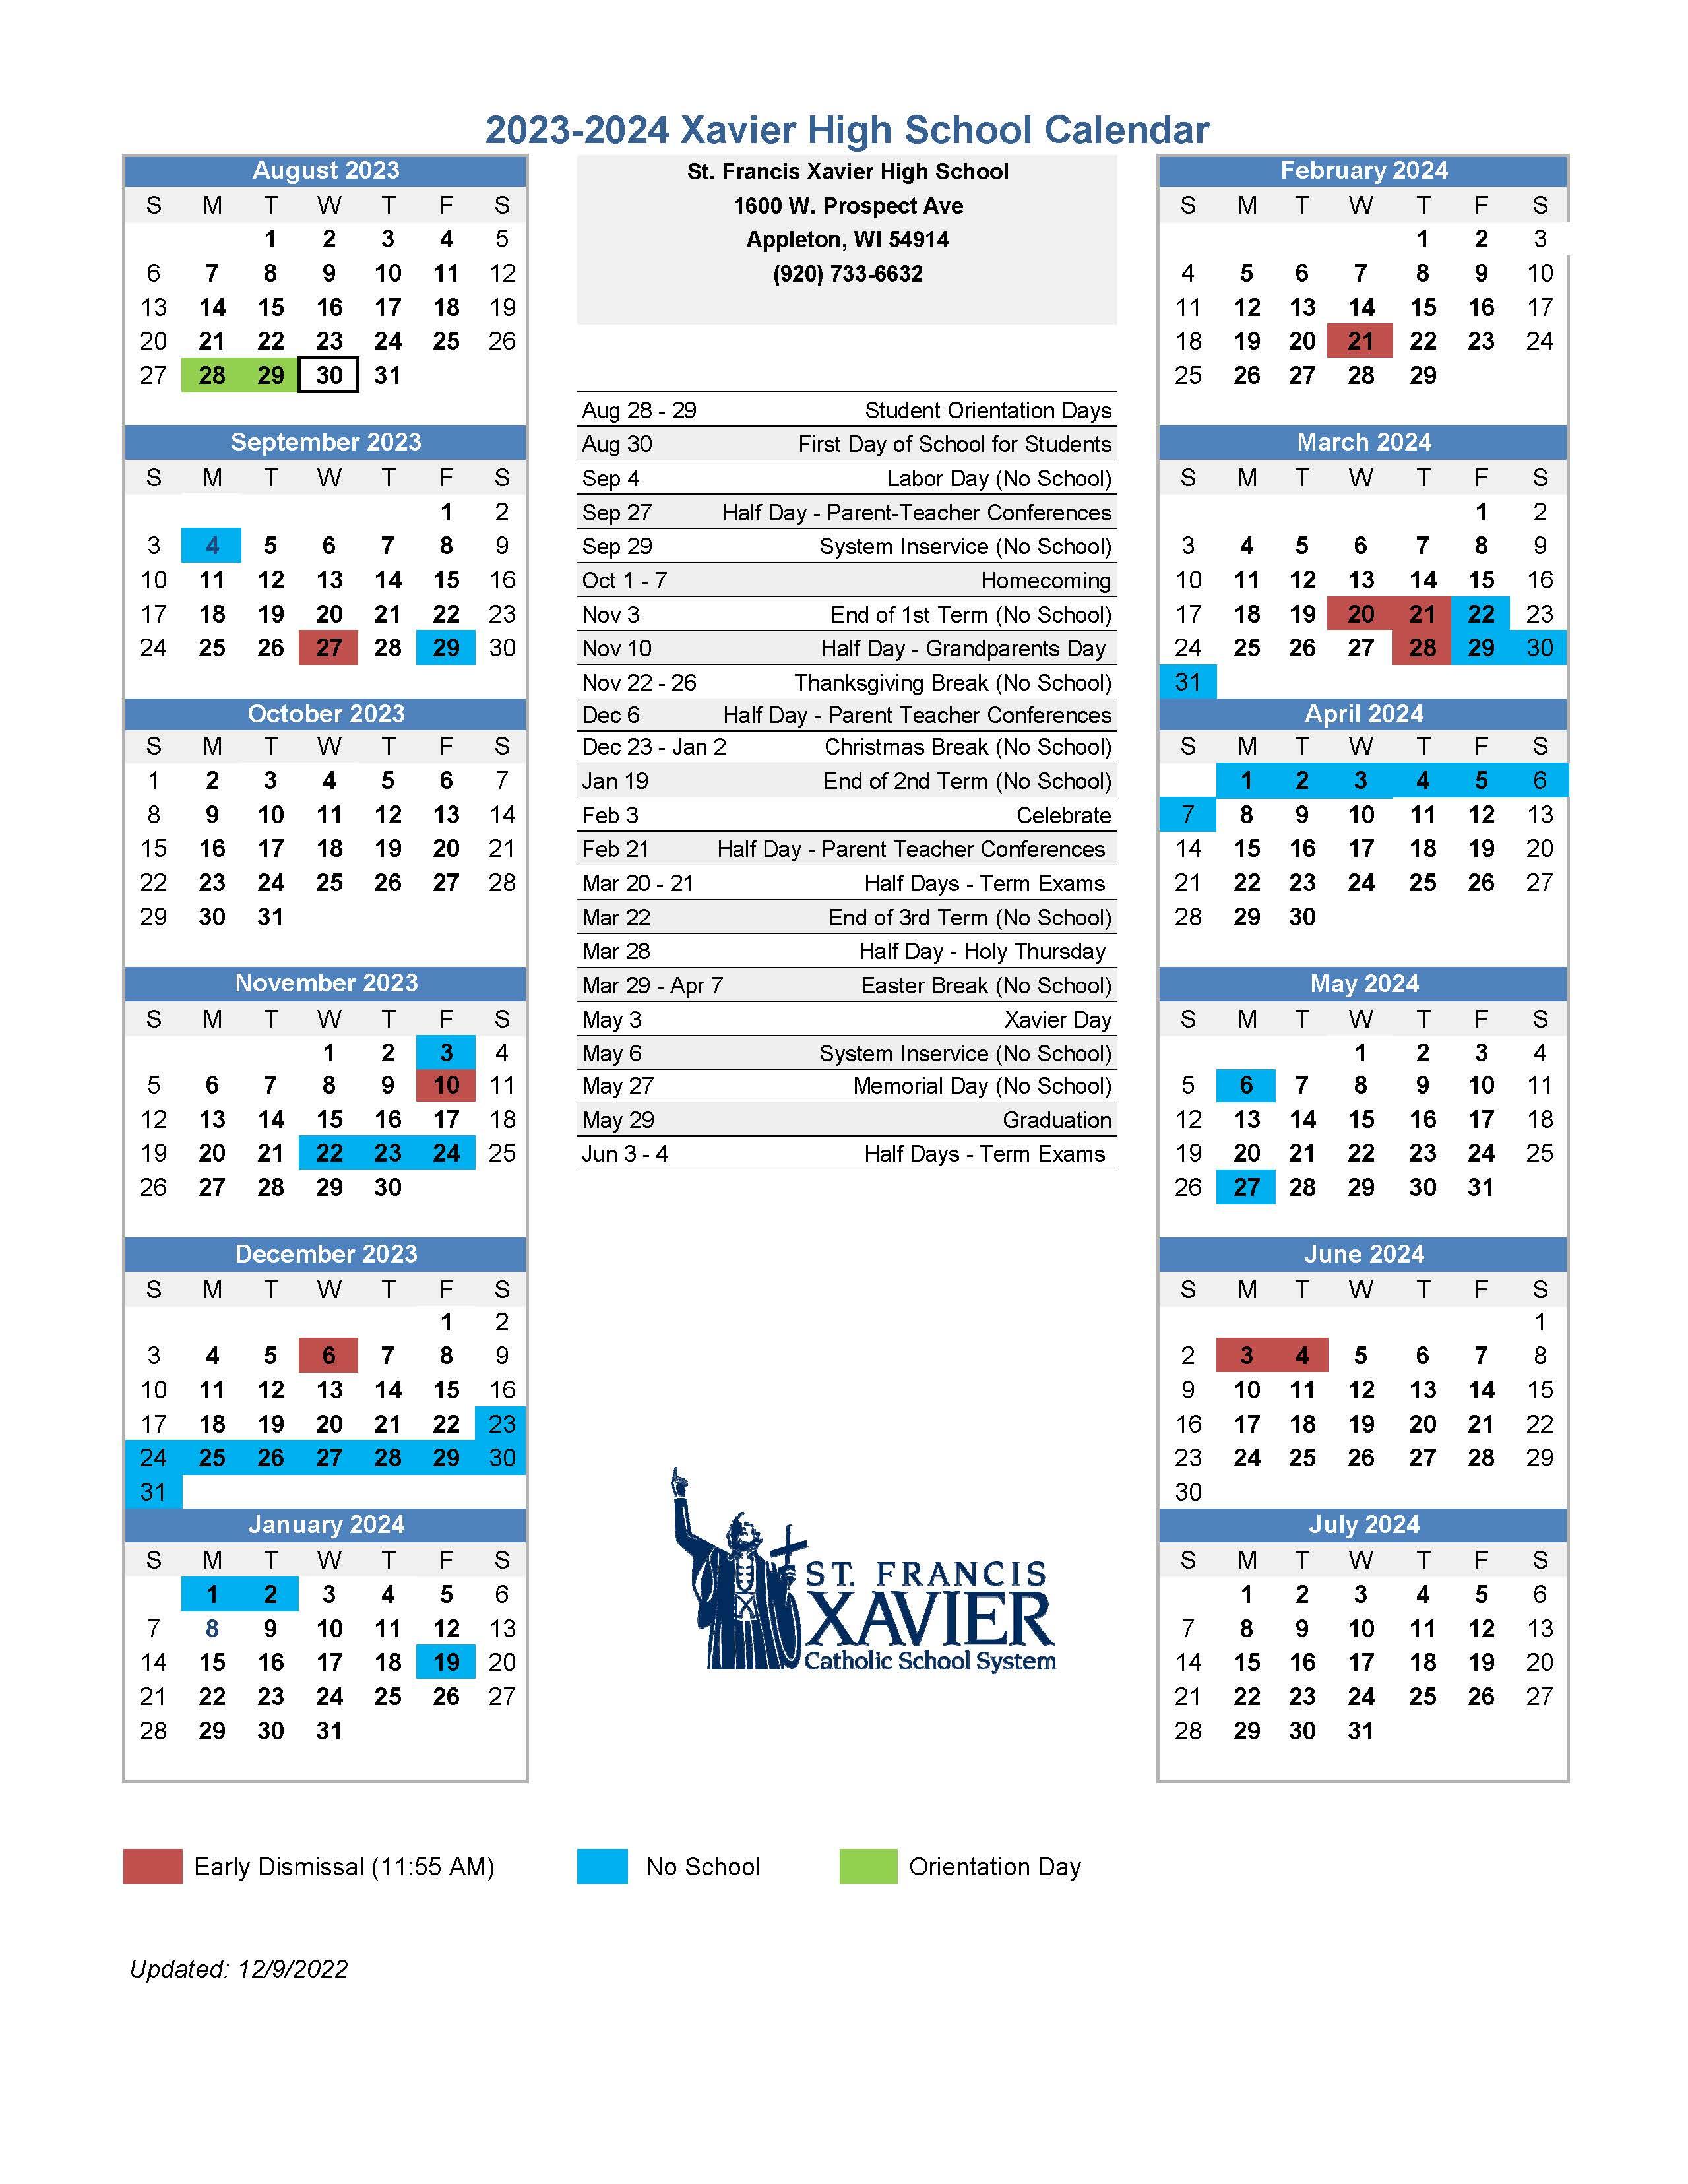 Xavier High School 2023-2024 Academic Calendar